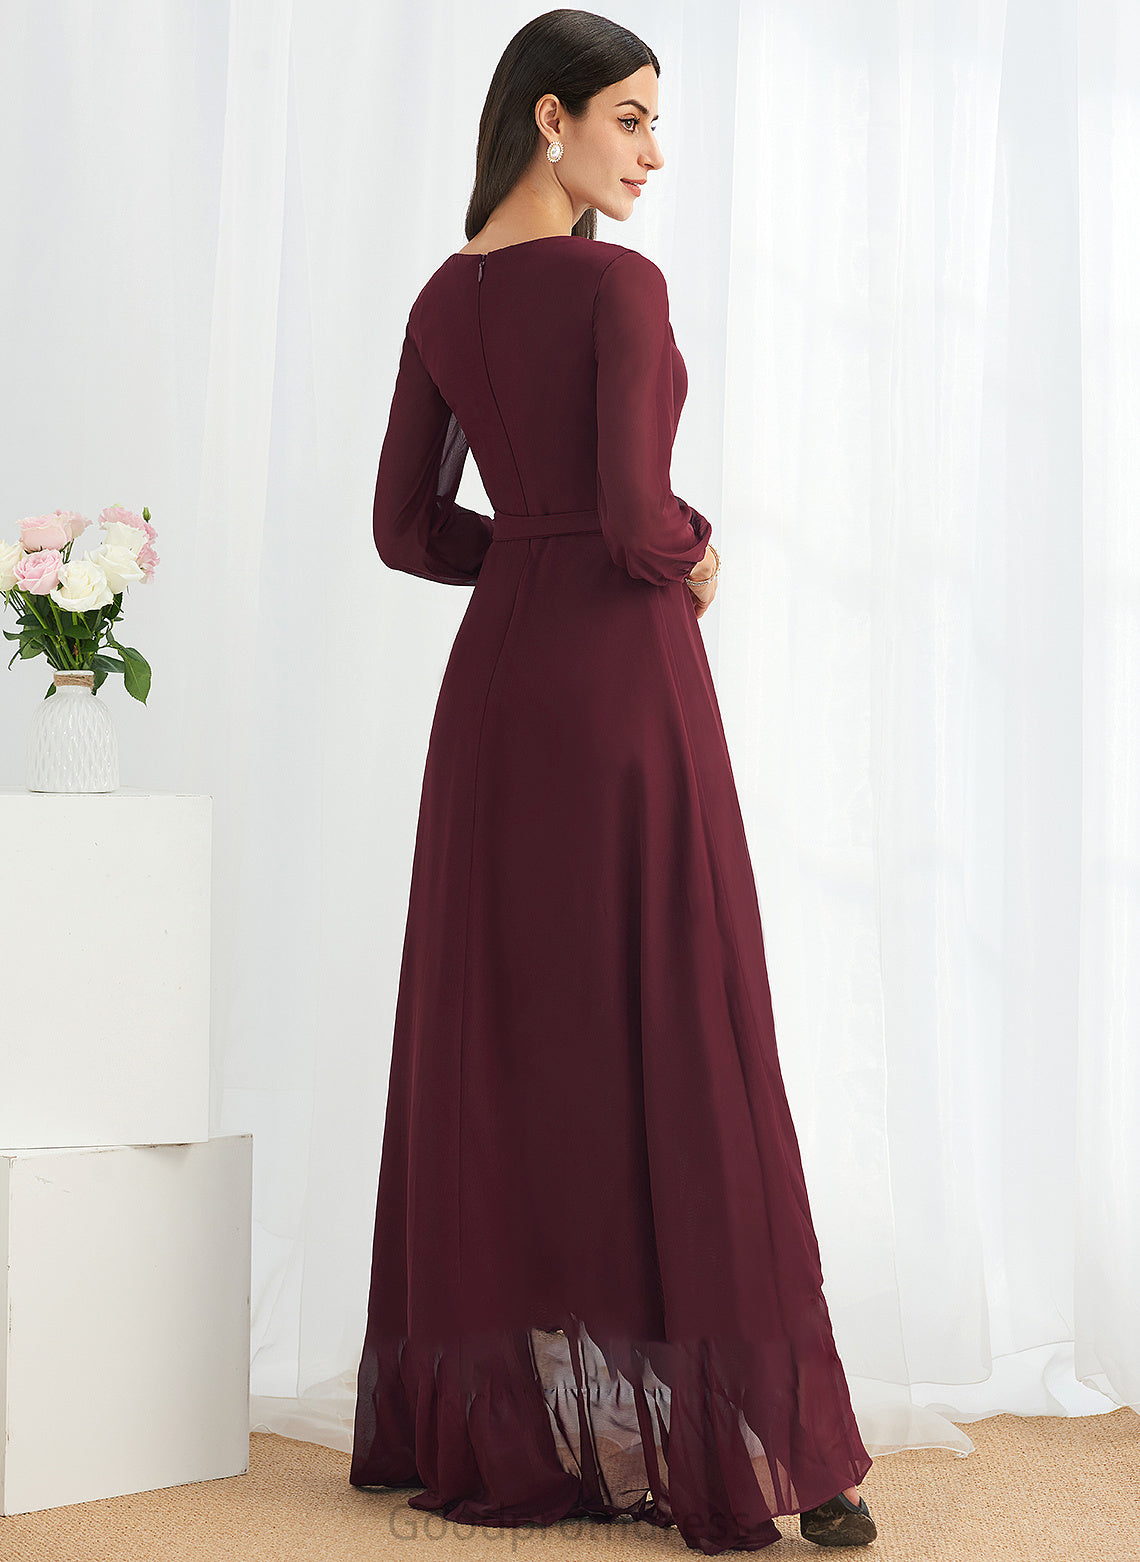 Embellishment Neckline Ruffle Length SplitFront Silhouette Asymmetrical V-neck Fabric A-Line Hope Sleeveless Bridesmaid Dresses